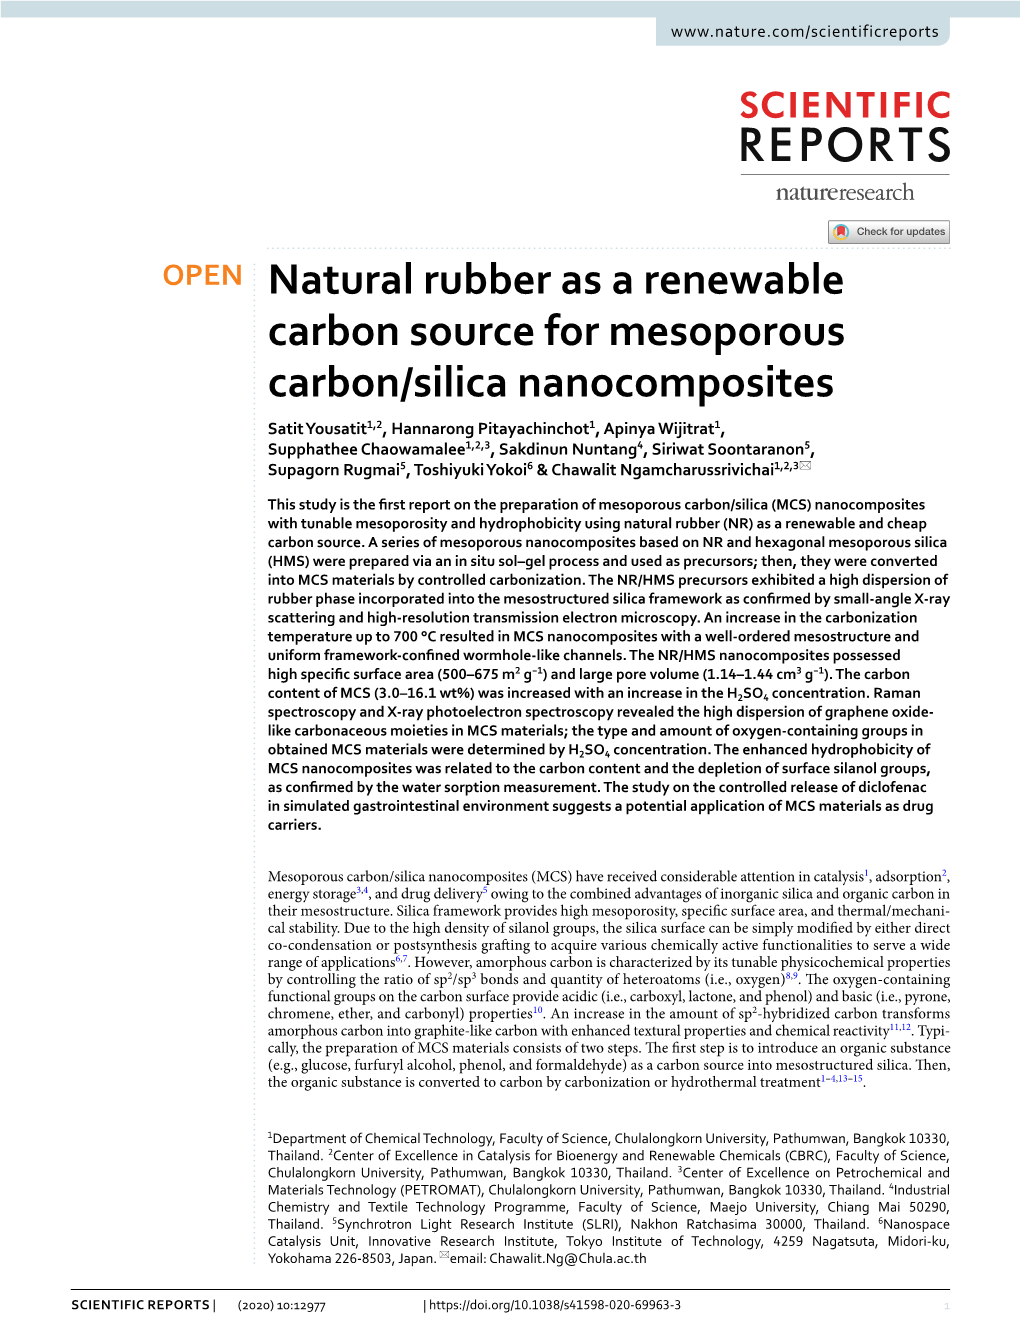 Natural Rubber As a Renewable Carbon Source for Mesoporous